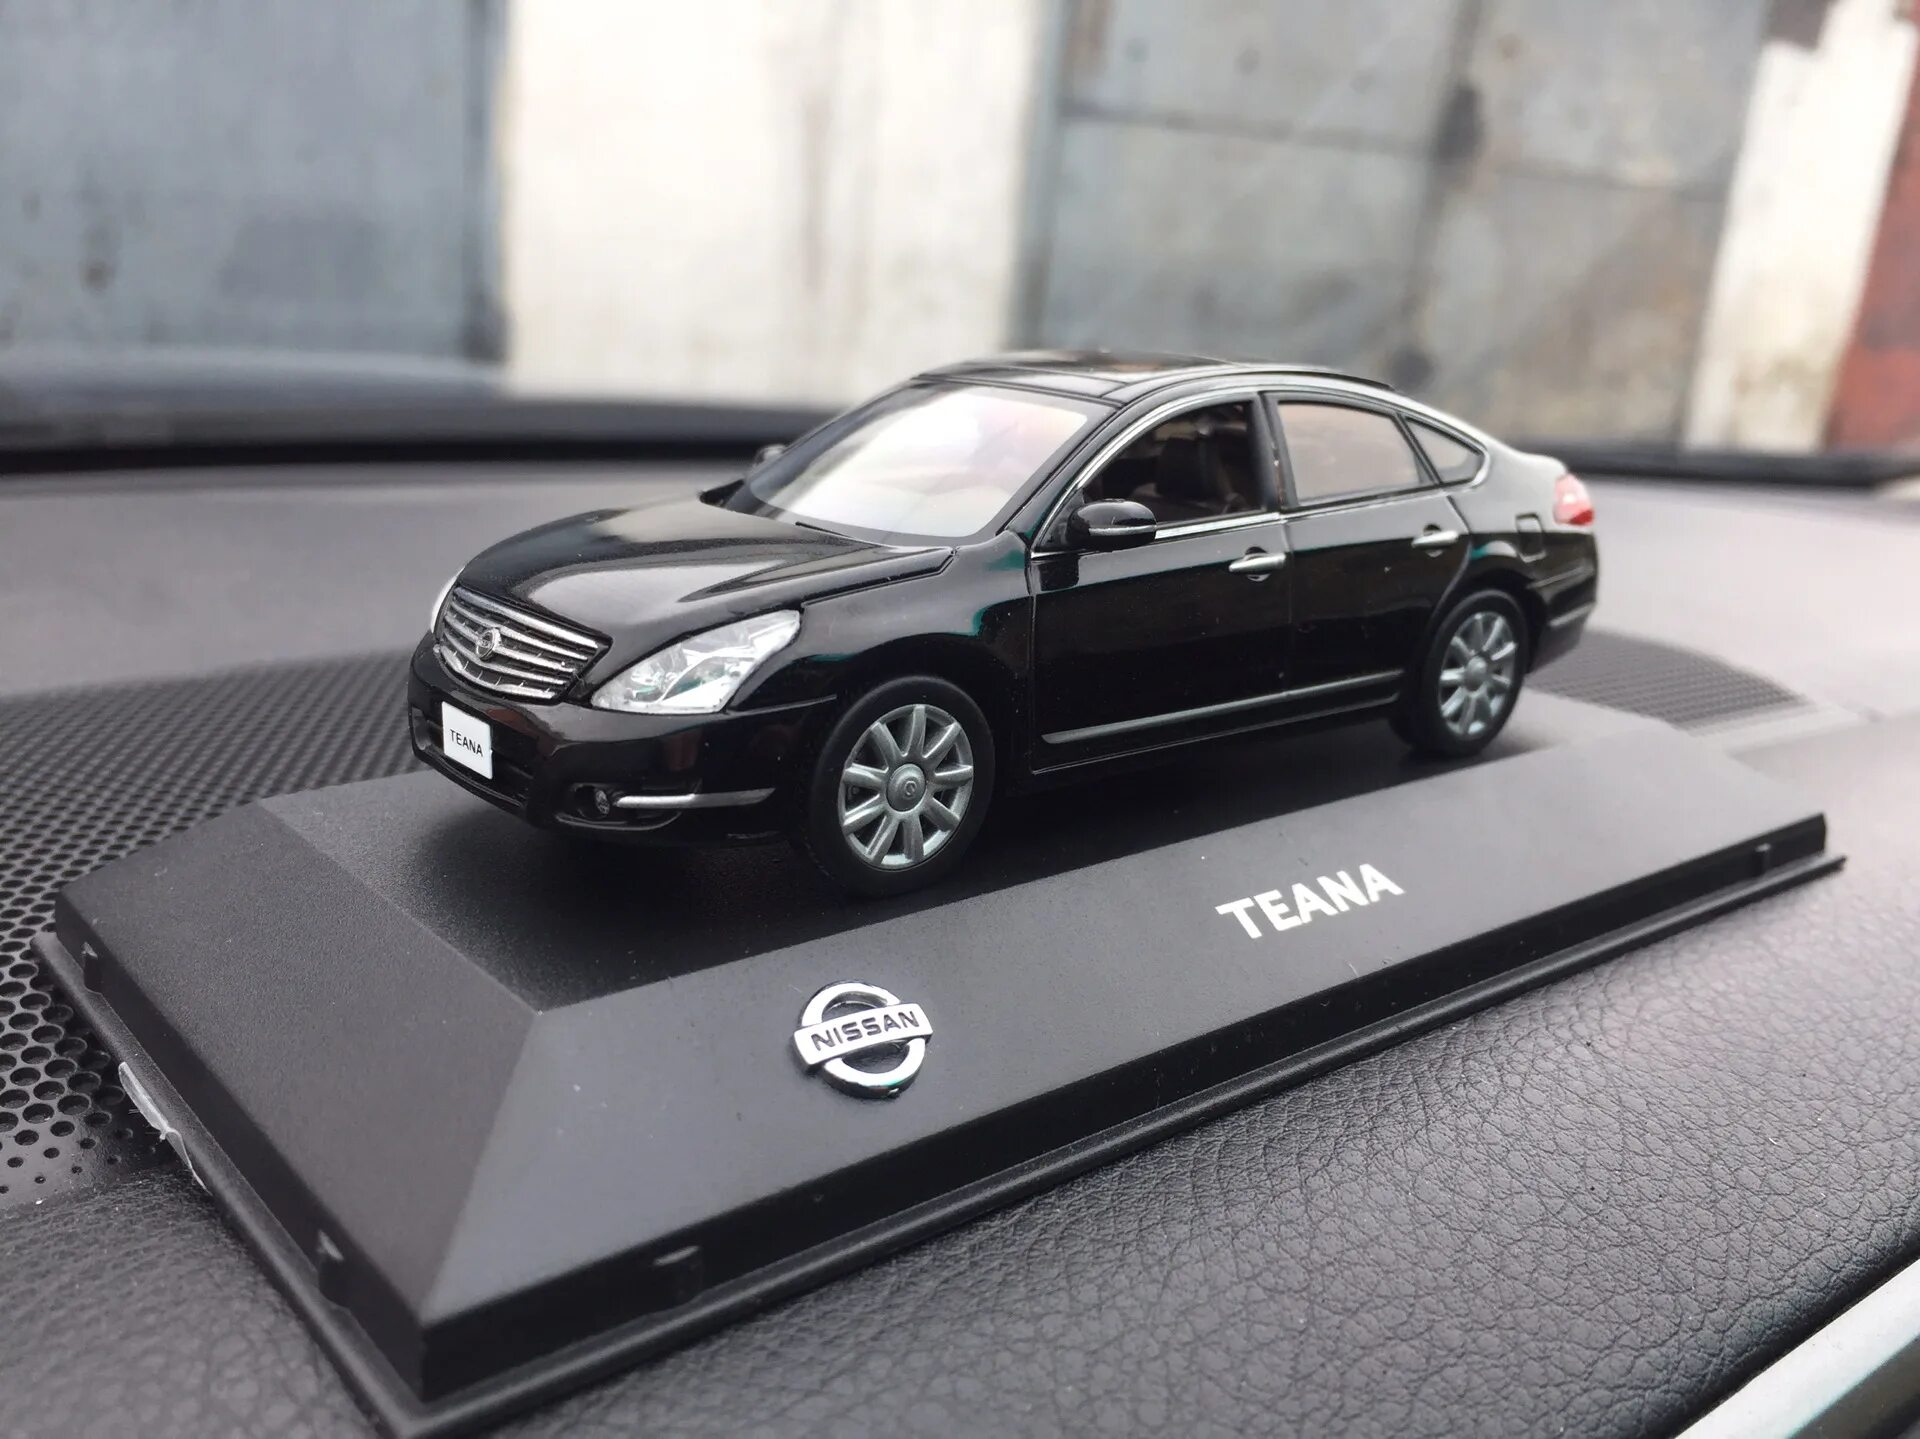 Теана 32 купить. 1/43 Nissan Teana. Модель Ниссан Теана j32. Nissan Teana 1 43 j31 игрушка. Моделька Nissan Teana j32.